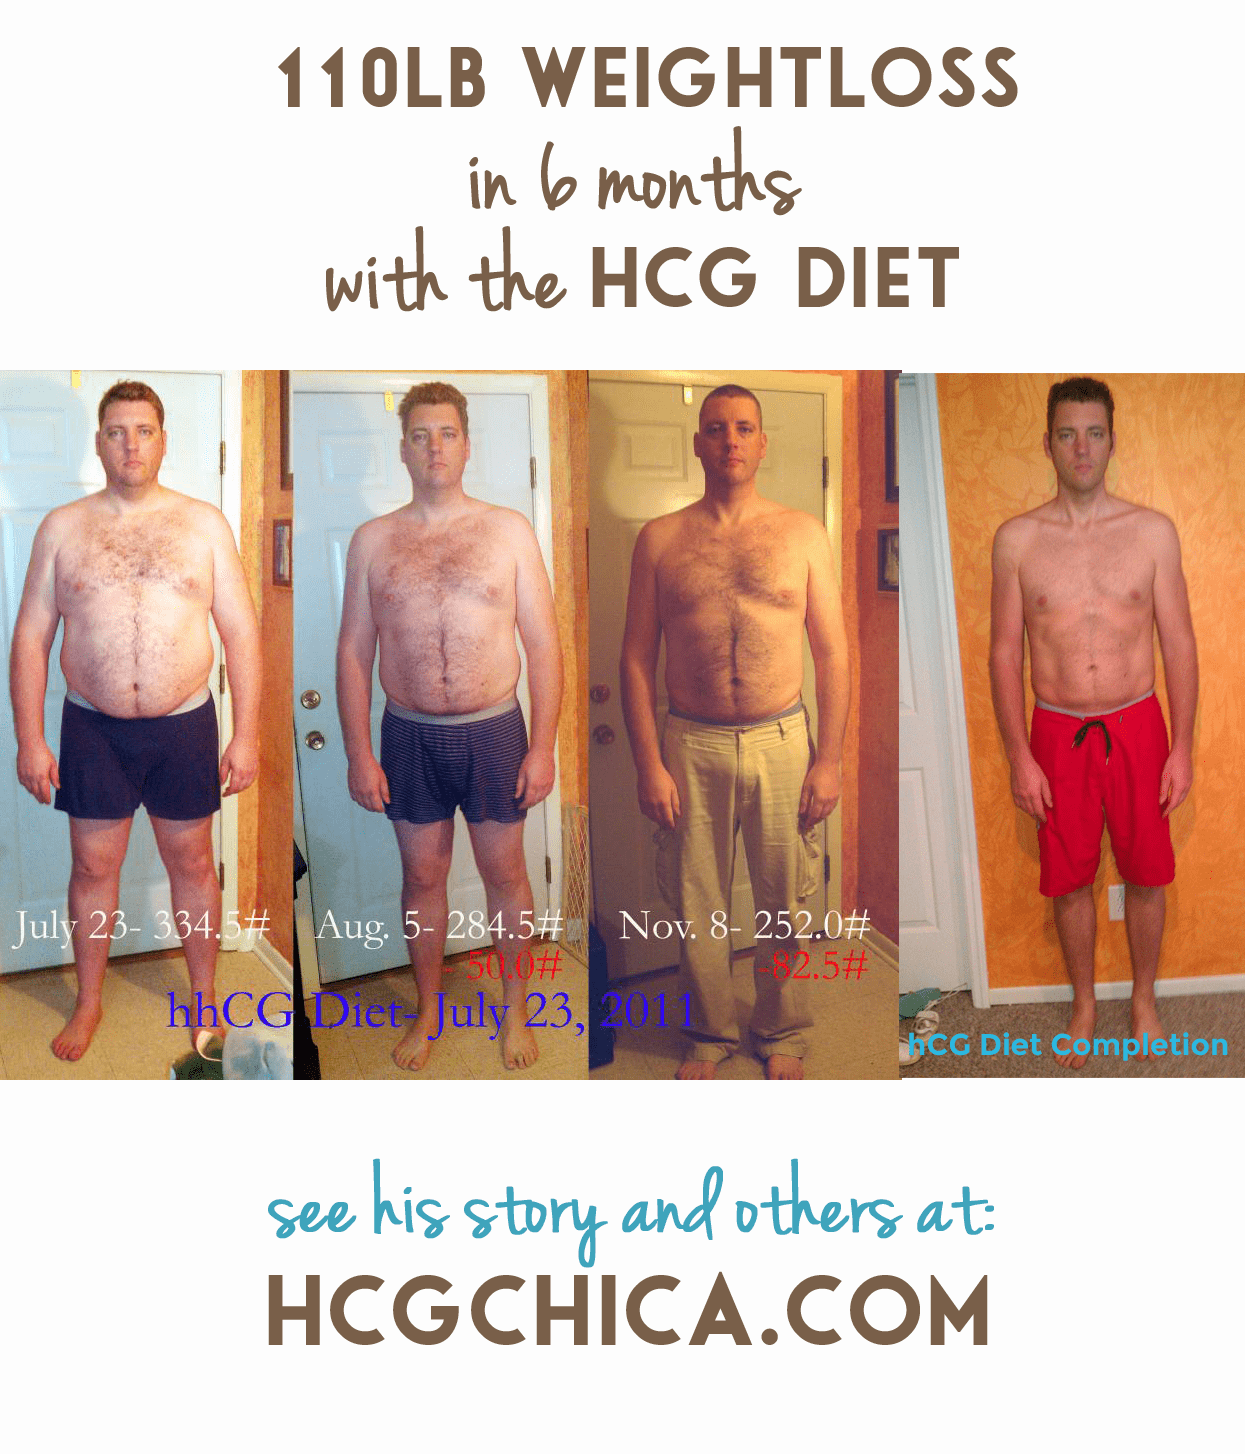 hCG Diet Reviews: Man's 100lb Weight Loss in 6 Months - Episode 9